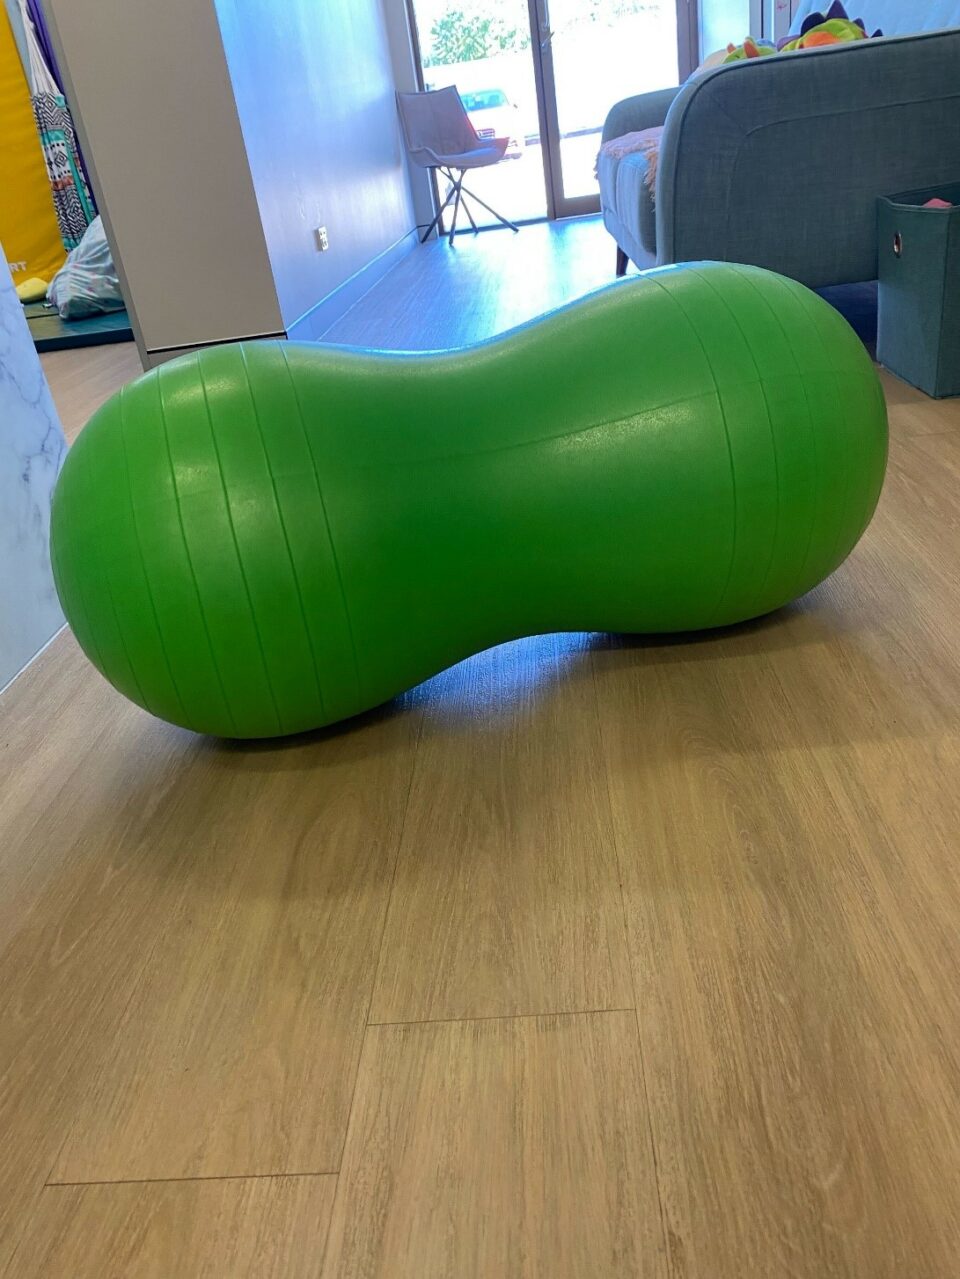 Green peanut ball